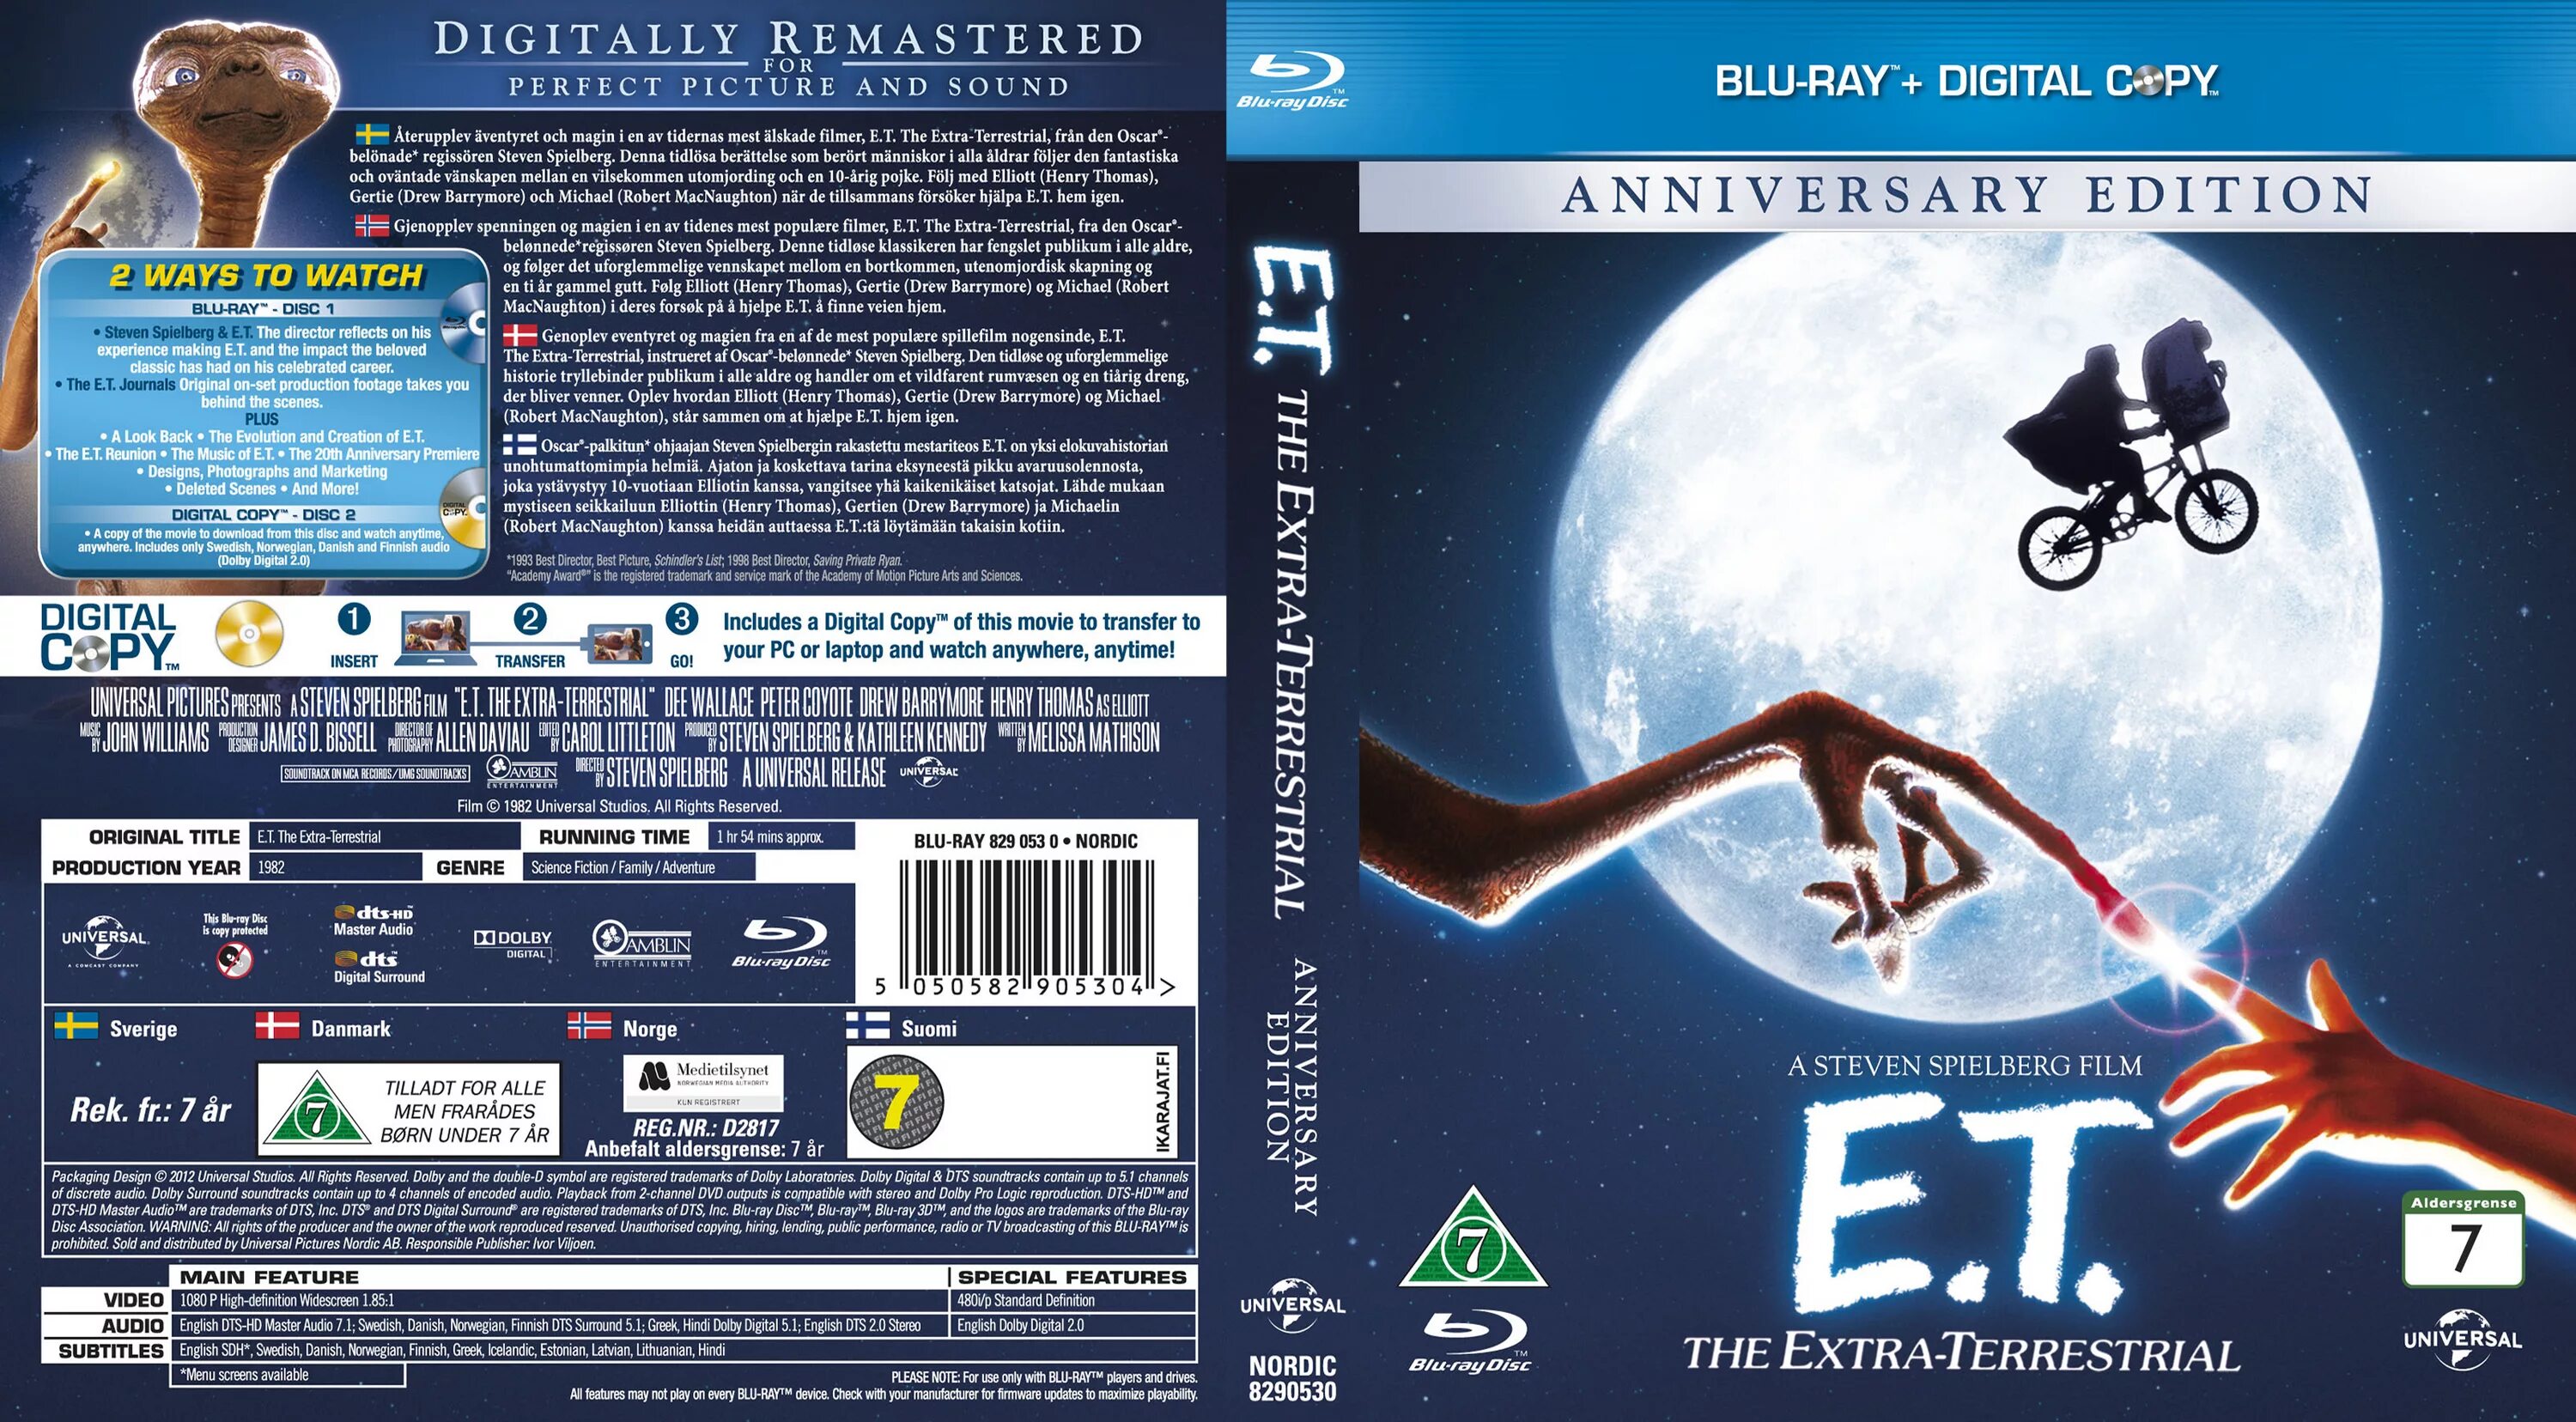 The extra years are. E.T. the Extra-Terrestrial 1982 Постер. Инопланетянин e.t. the Extra-Terrestrial 1982. Инопланетянин 1982 Постер.